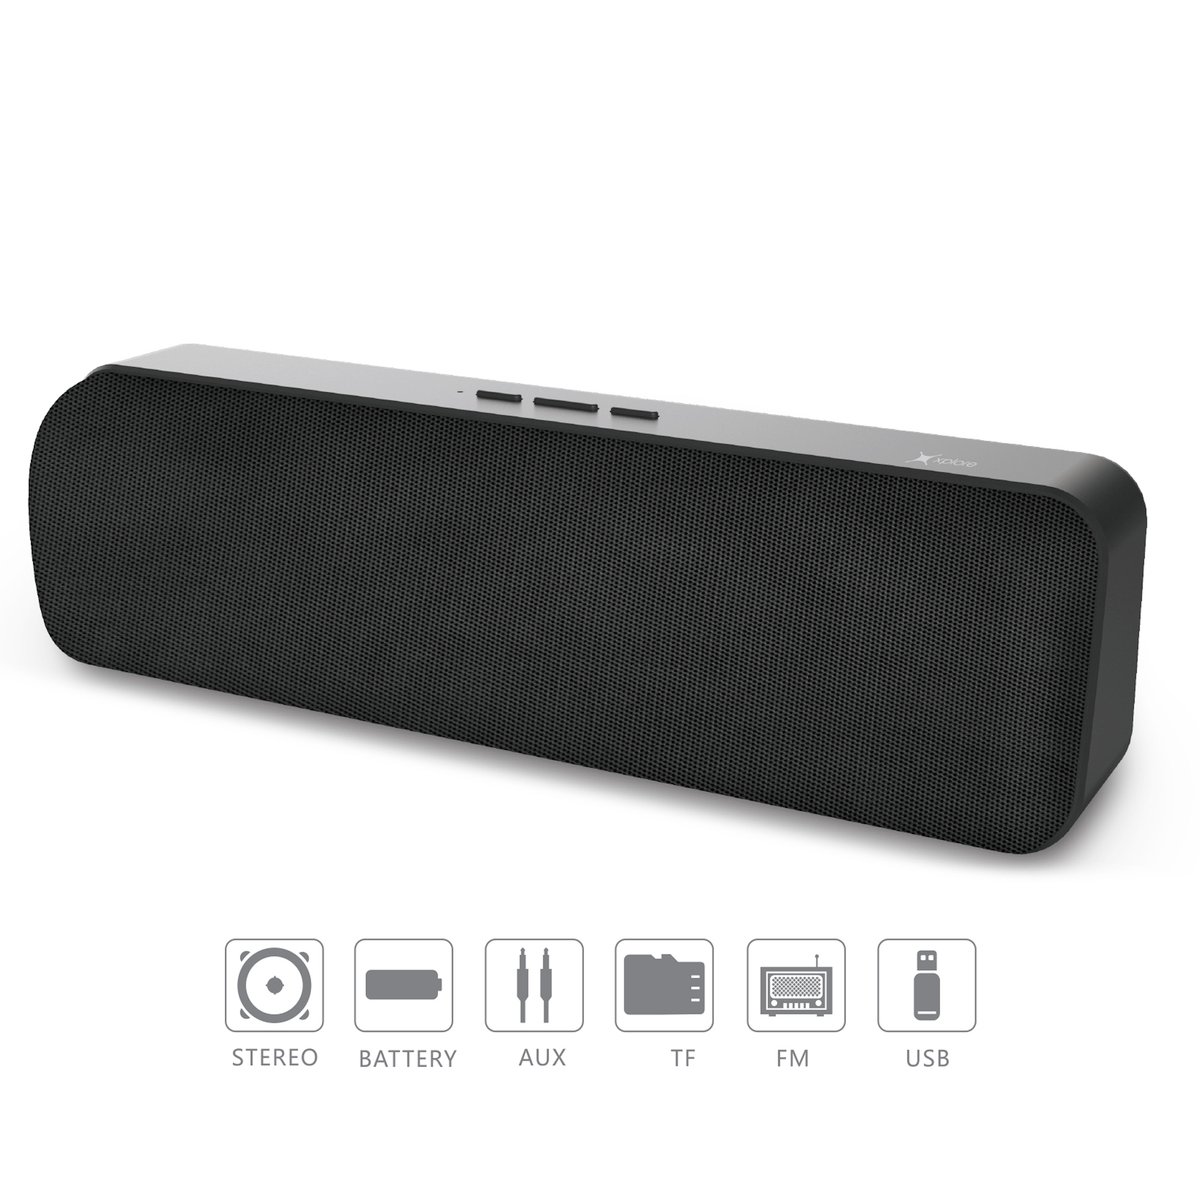 Xplore Bluetooth Speaker WP20 Black